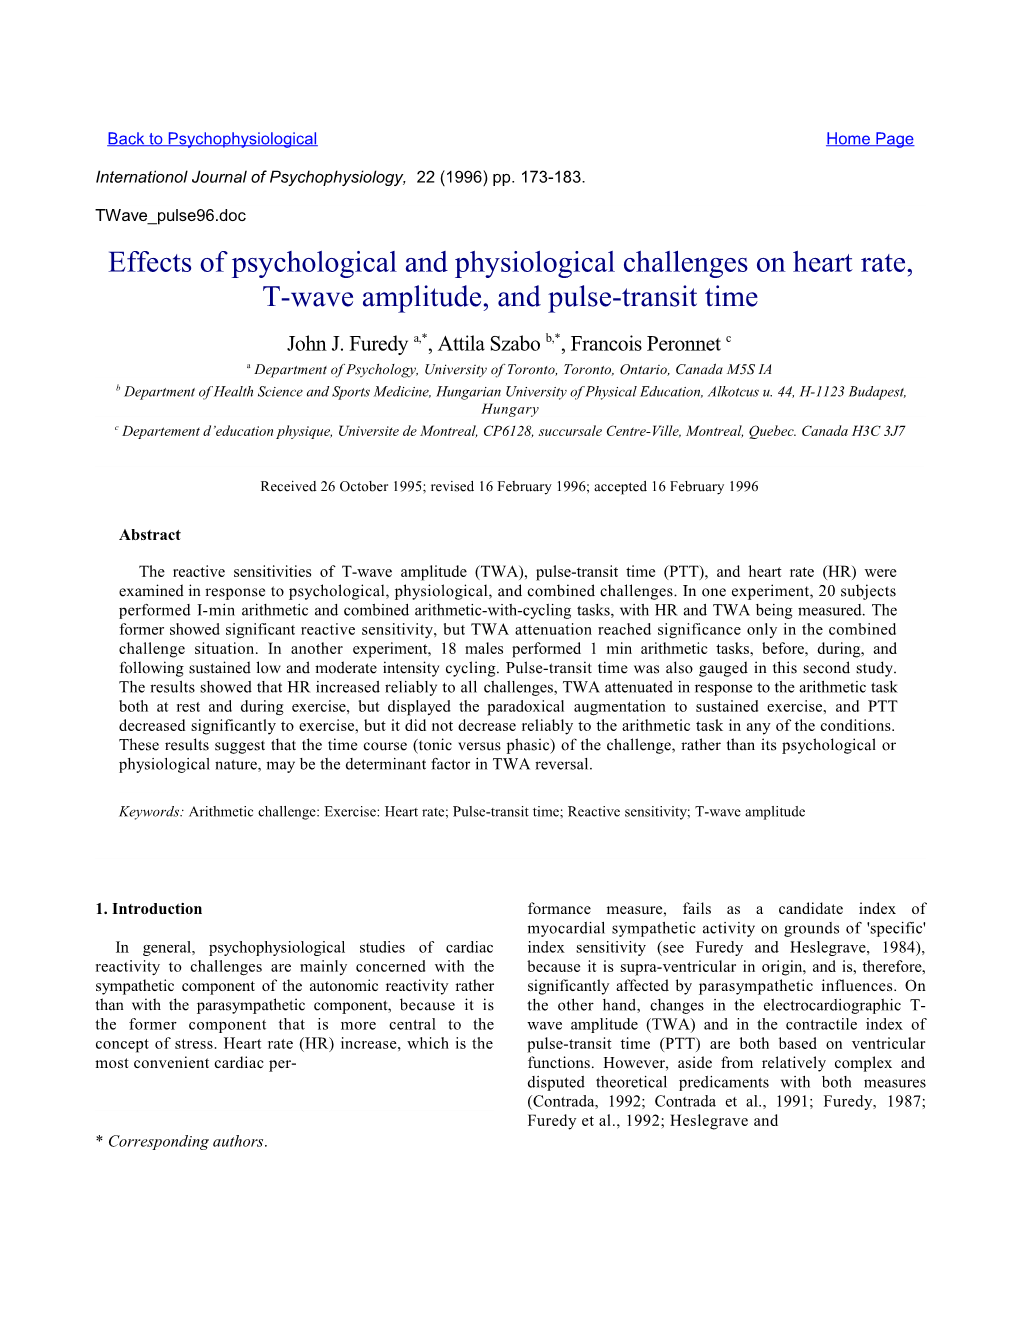 J.J. Furedy Et Al./Intemational Journal of Psychophysiology 22 (1996) 173-183